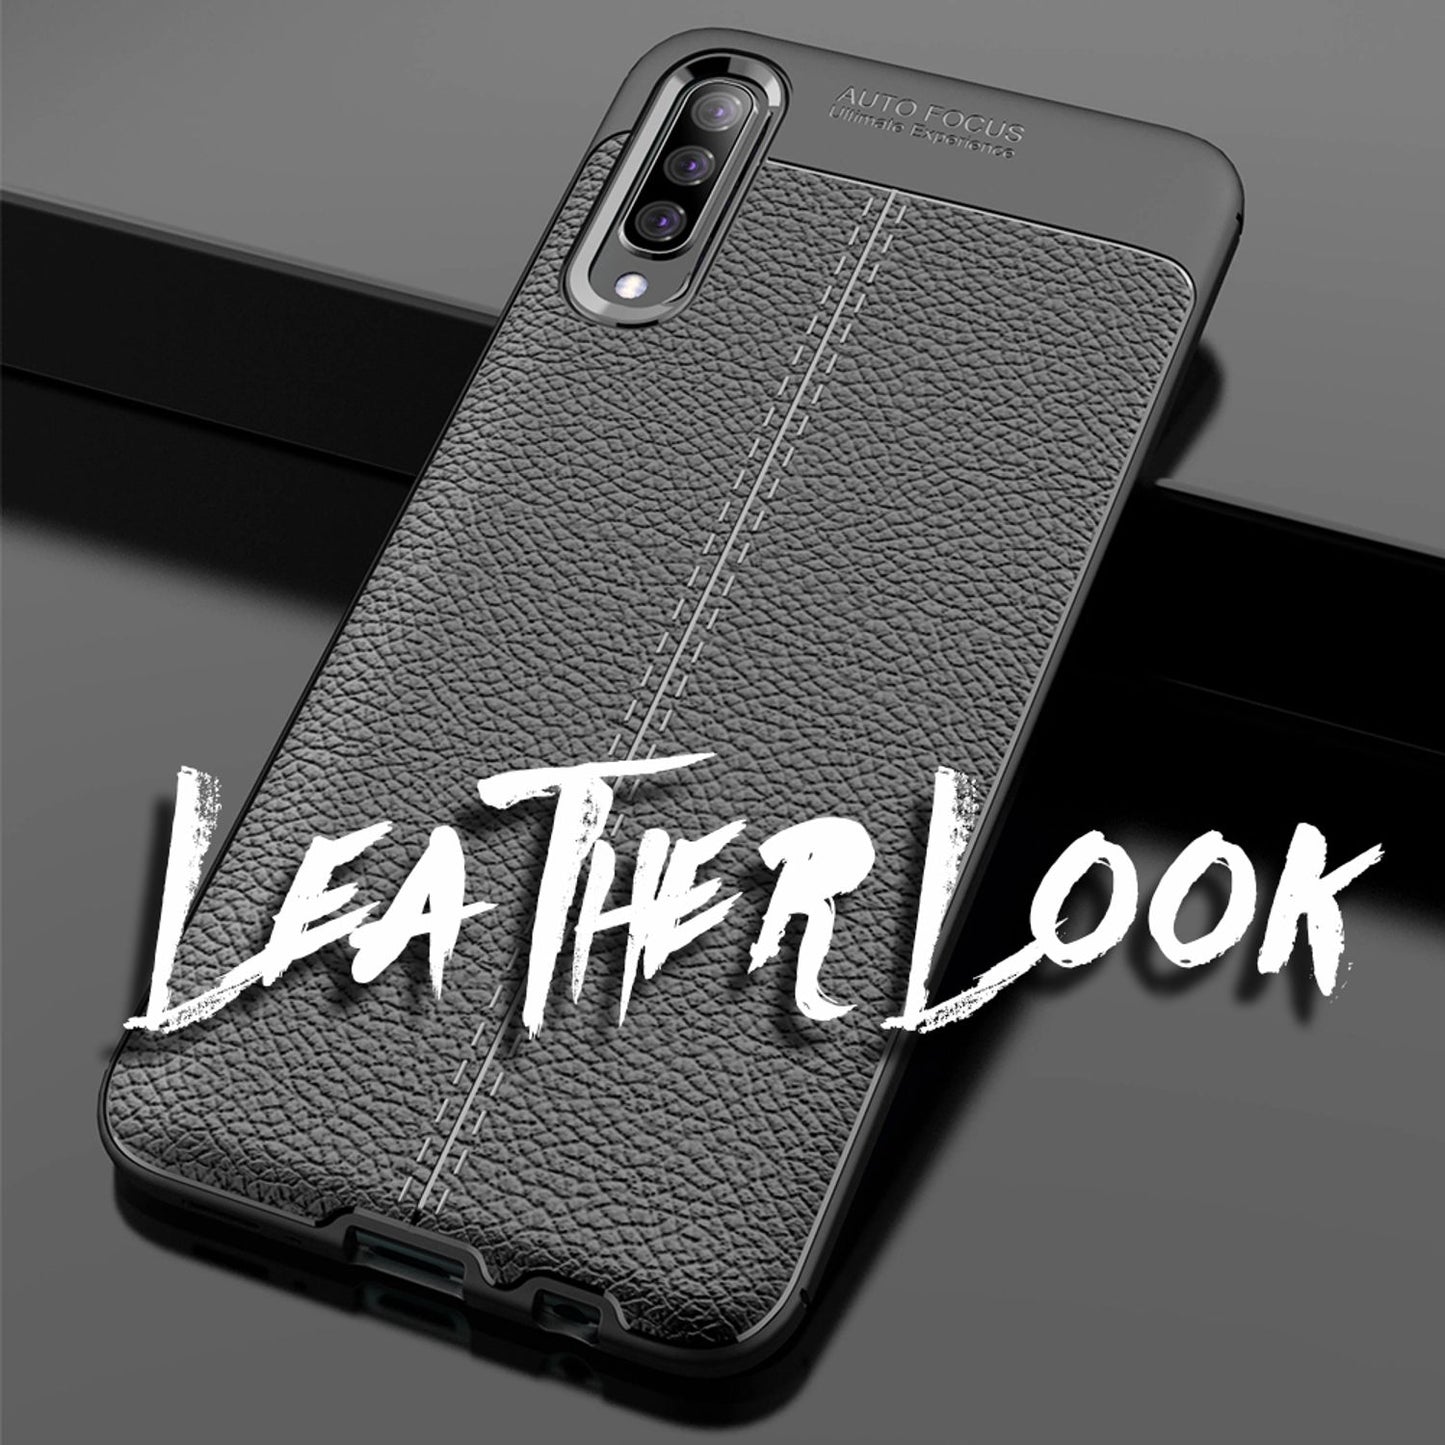 NALIA Leder Look Handy Hülle für Samsung Galaxy A50, Schutz Case Cover Bumper